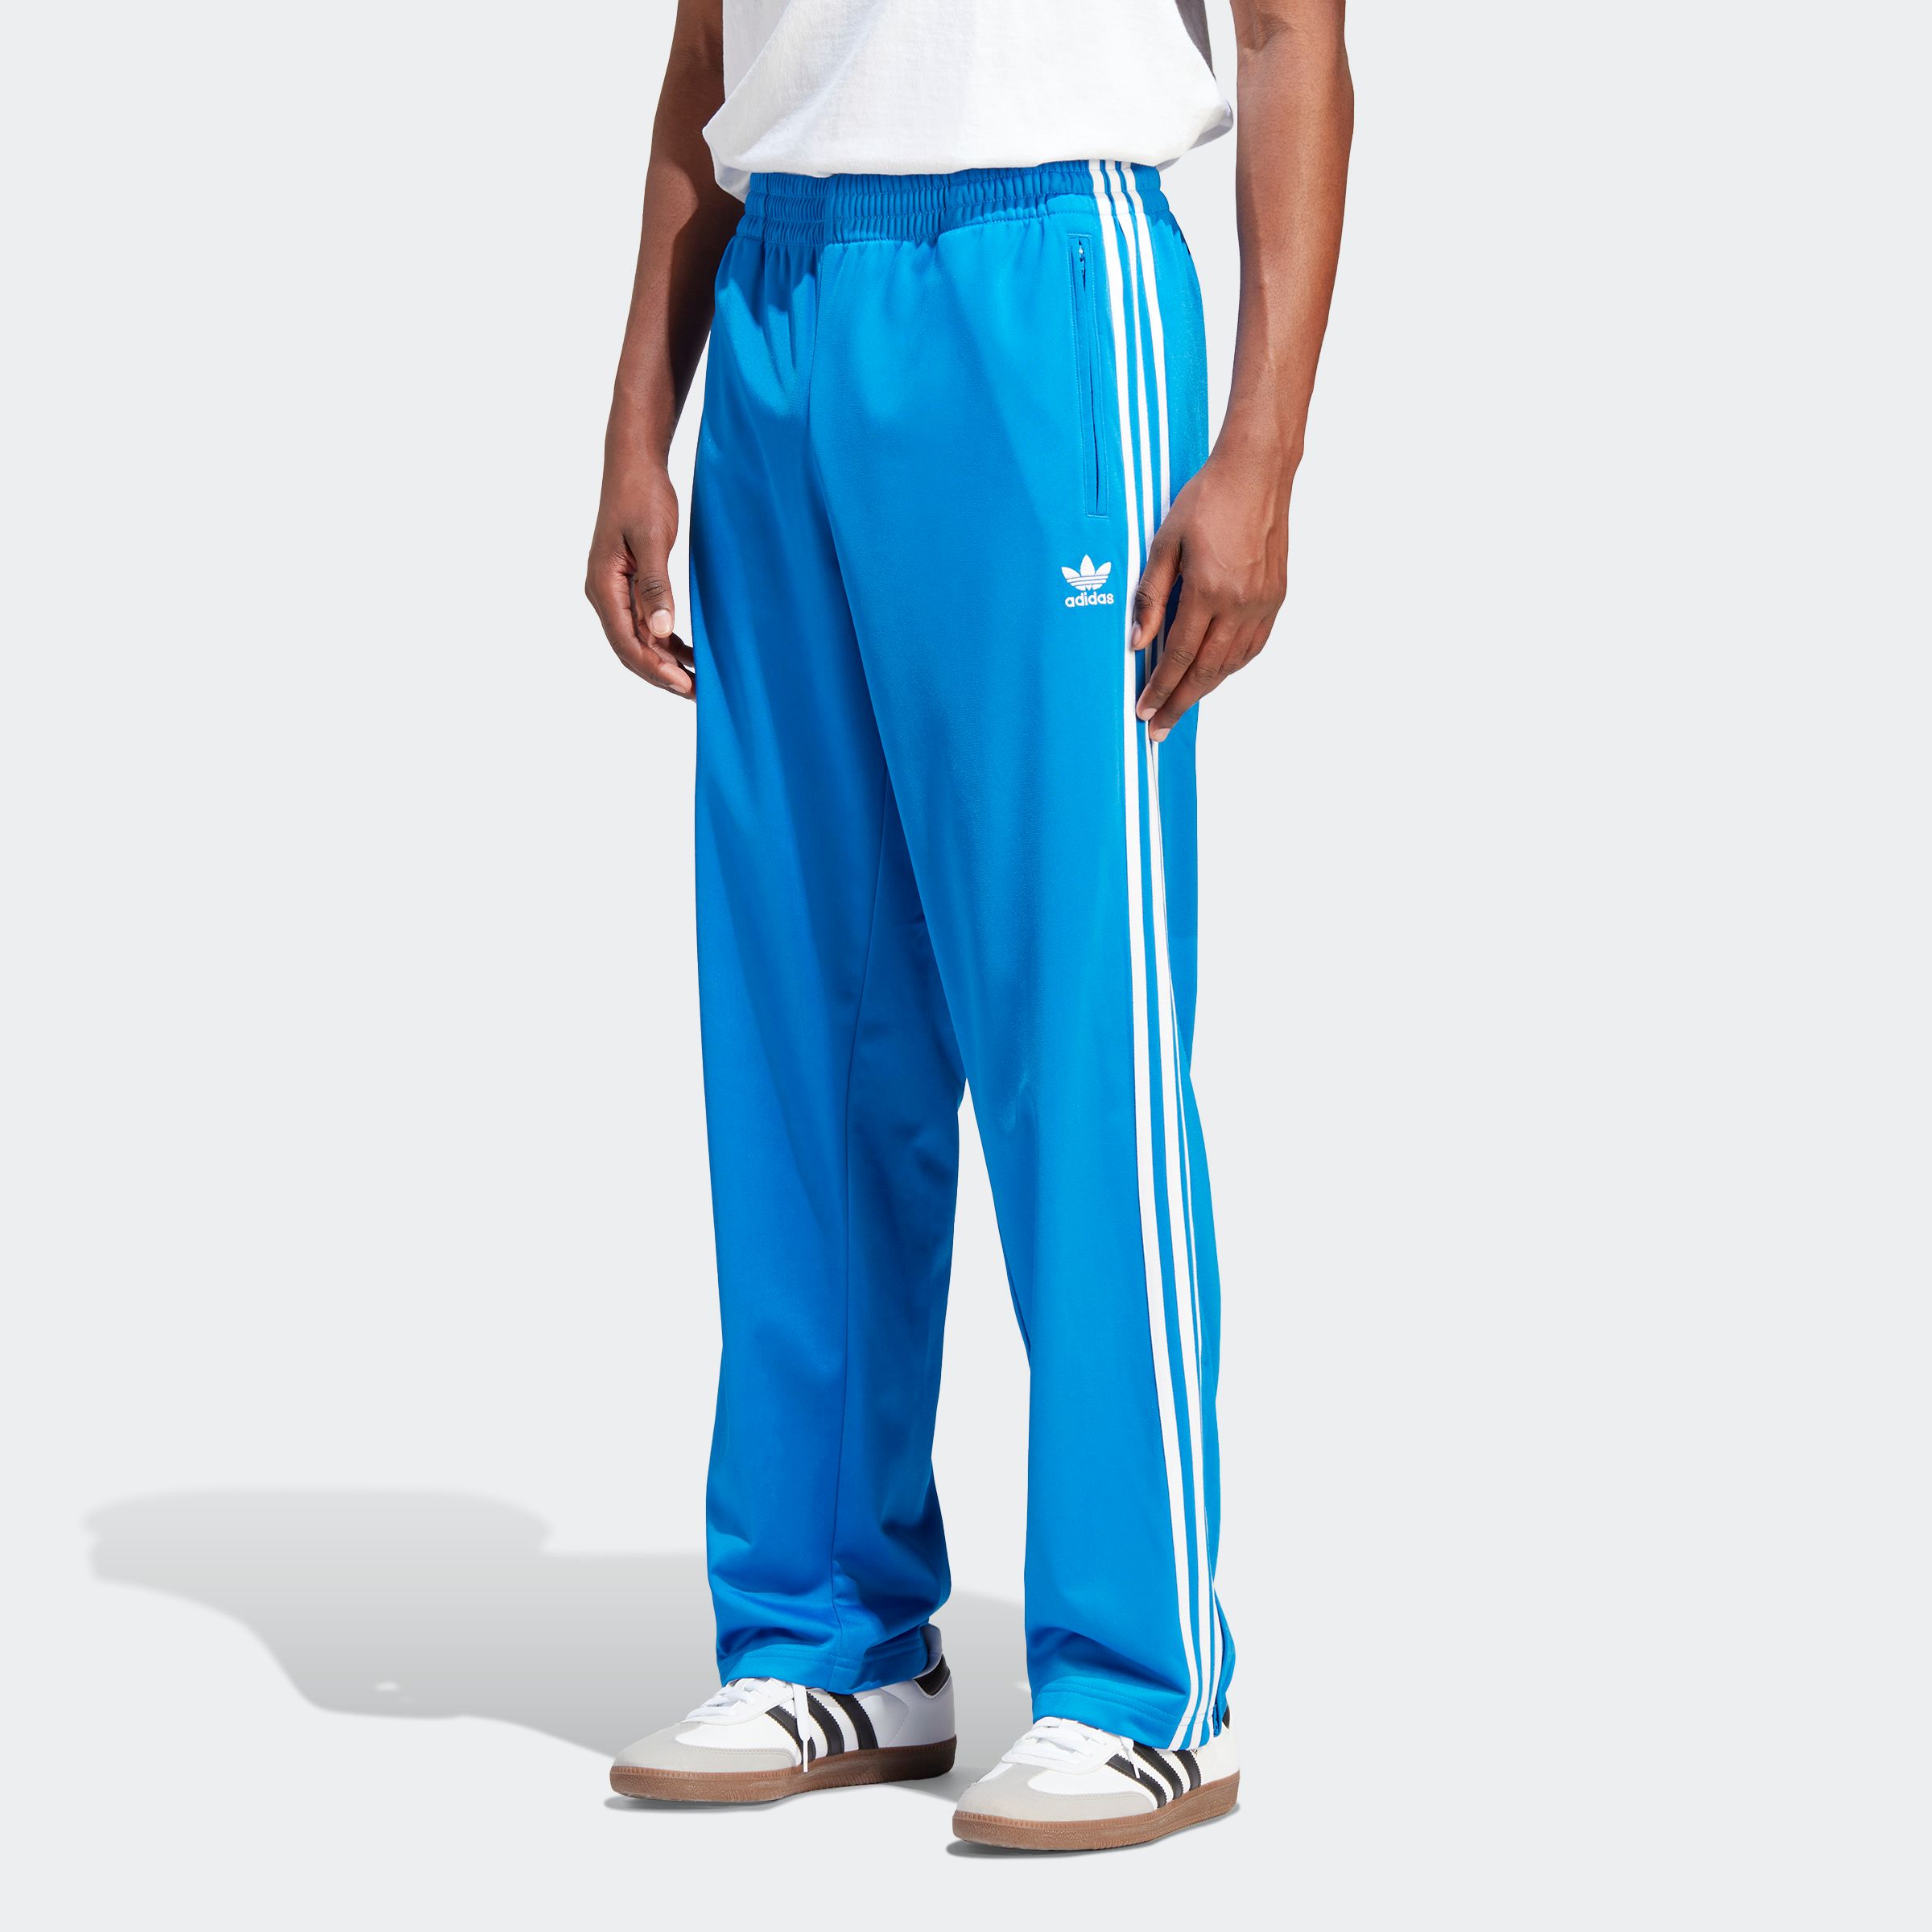 STAB | Adidas Firebird Track Pants: Blue Bird